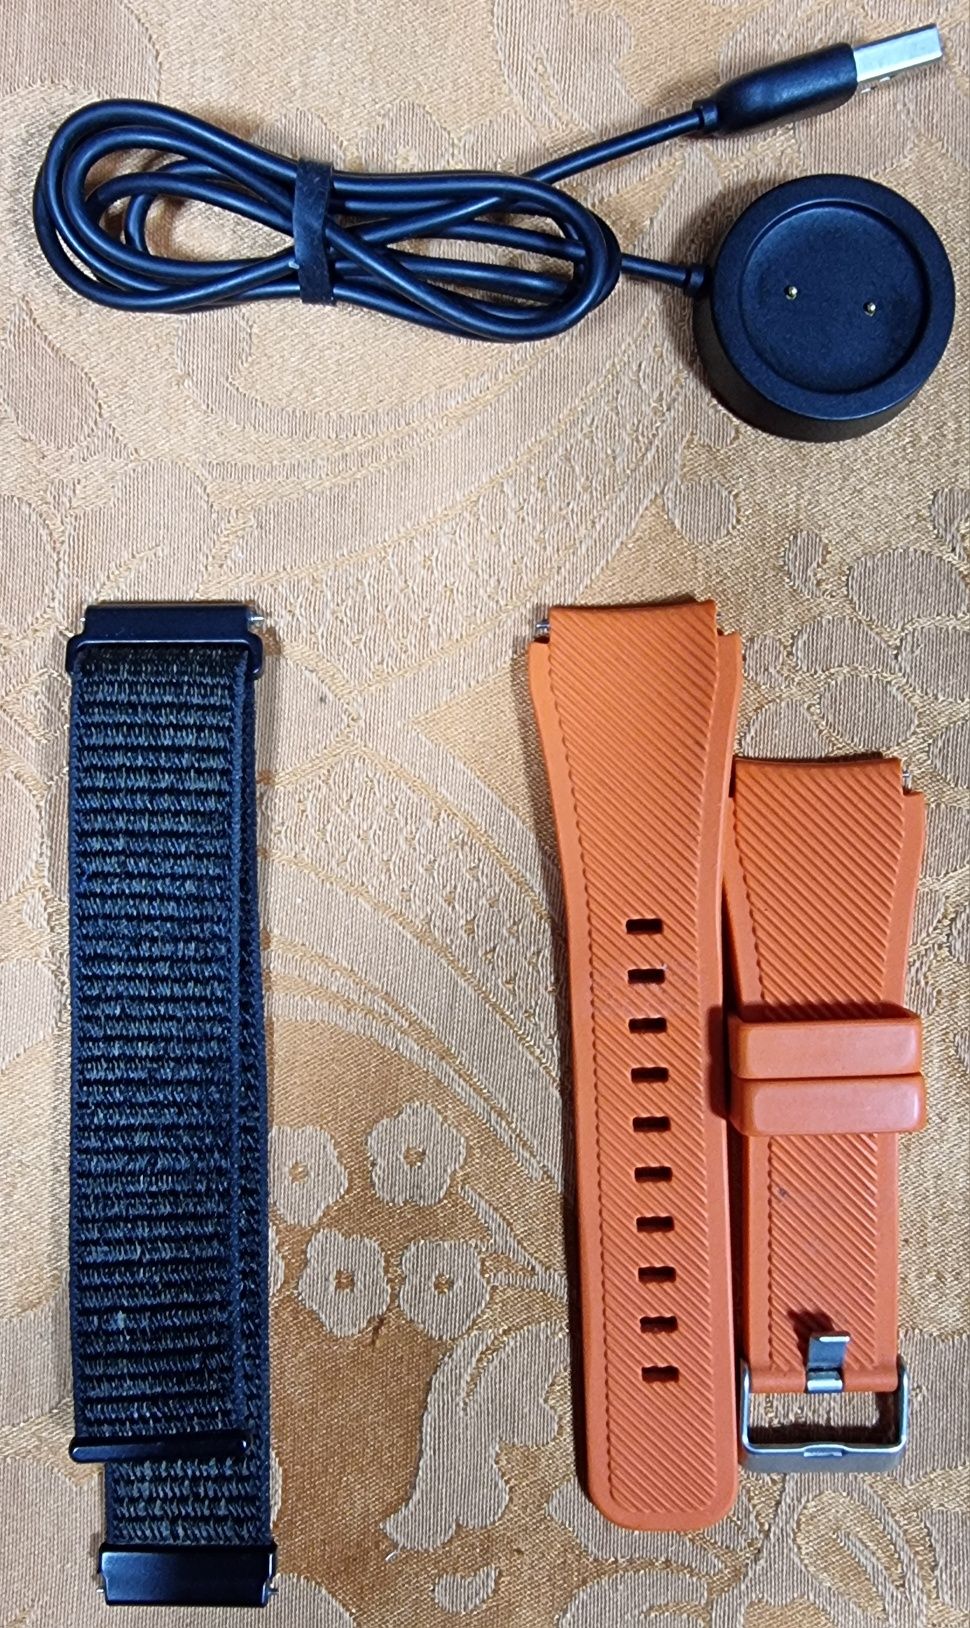 Vendo smartwatch Xiaomi Amazfit GTR impecavel